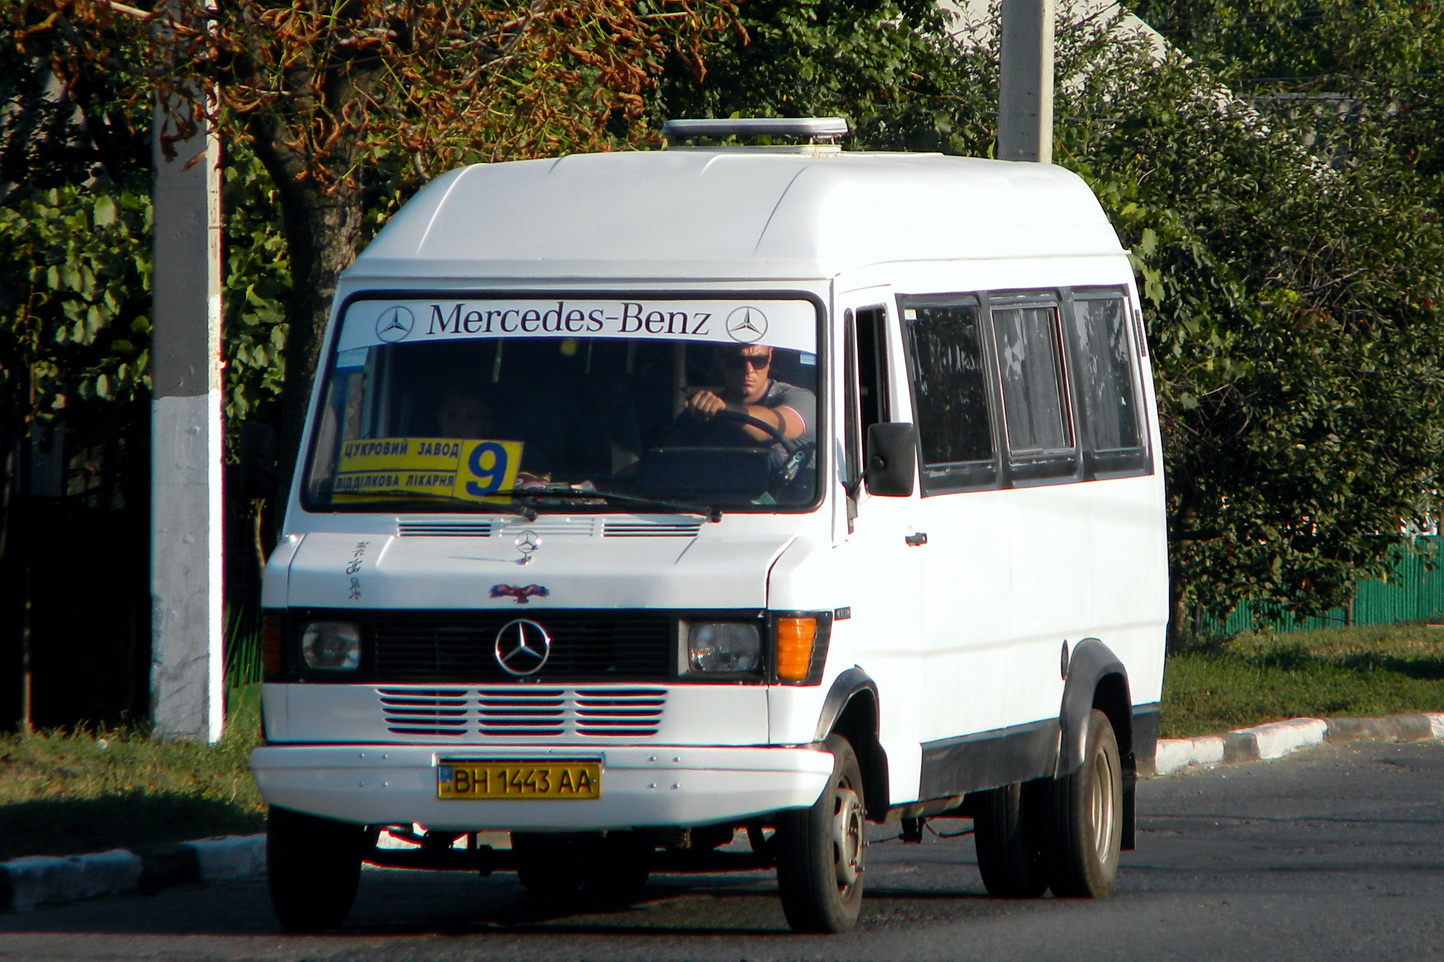 Одесская область, Mercedes-Benz T1 409D № BH 1443 AA